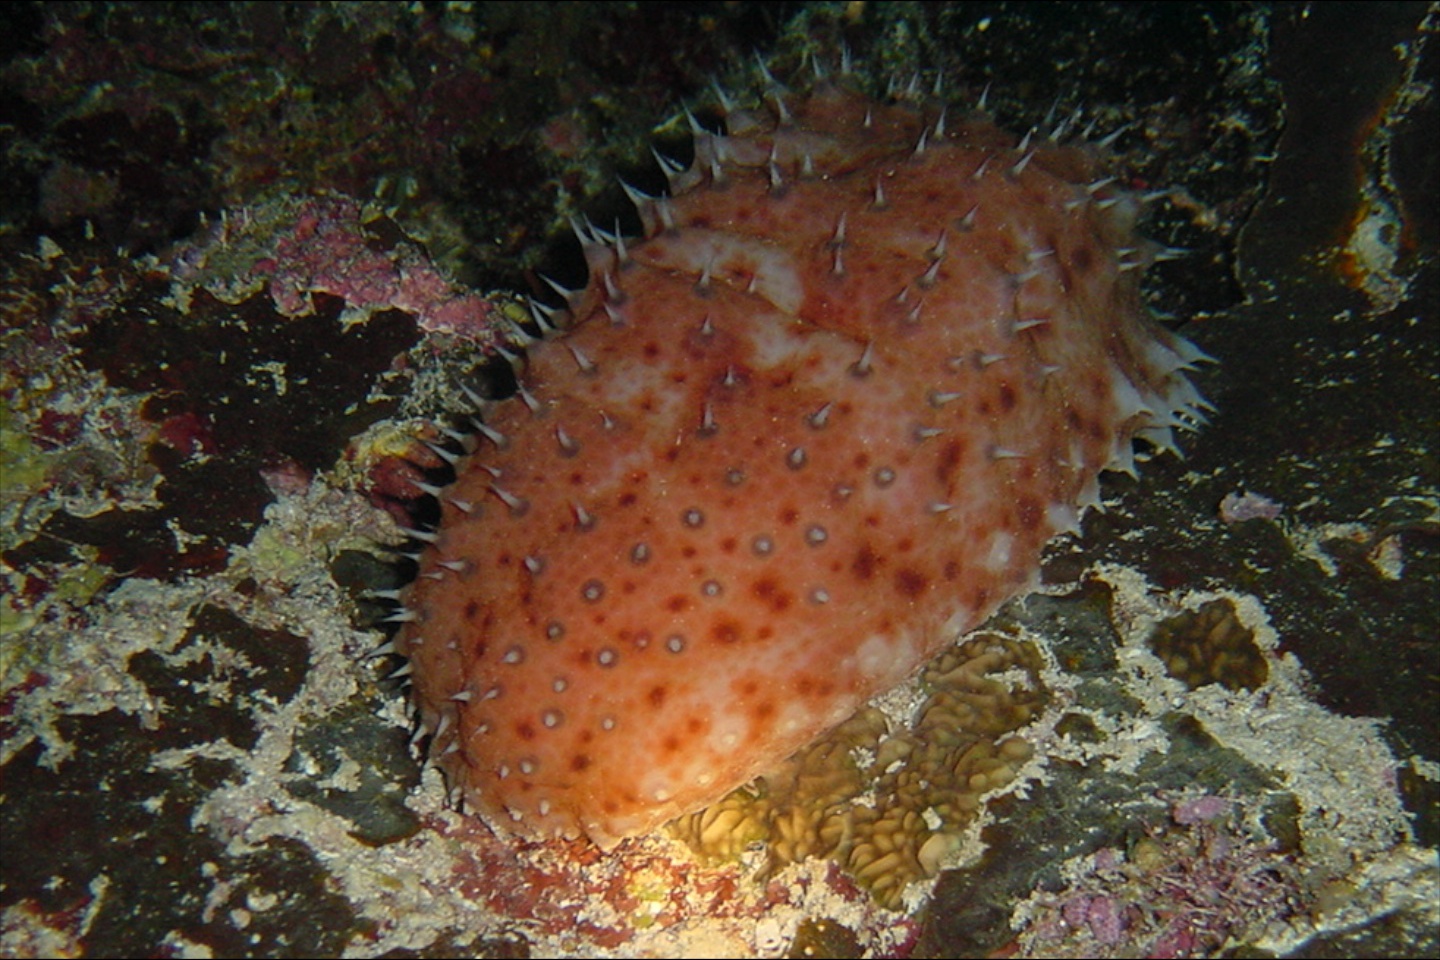 Night-wandering sea cucumber